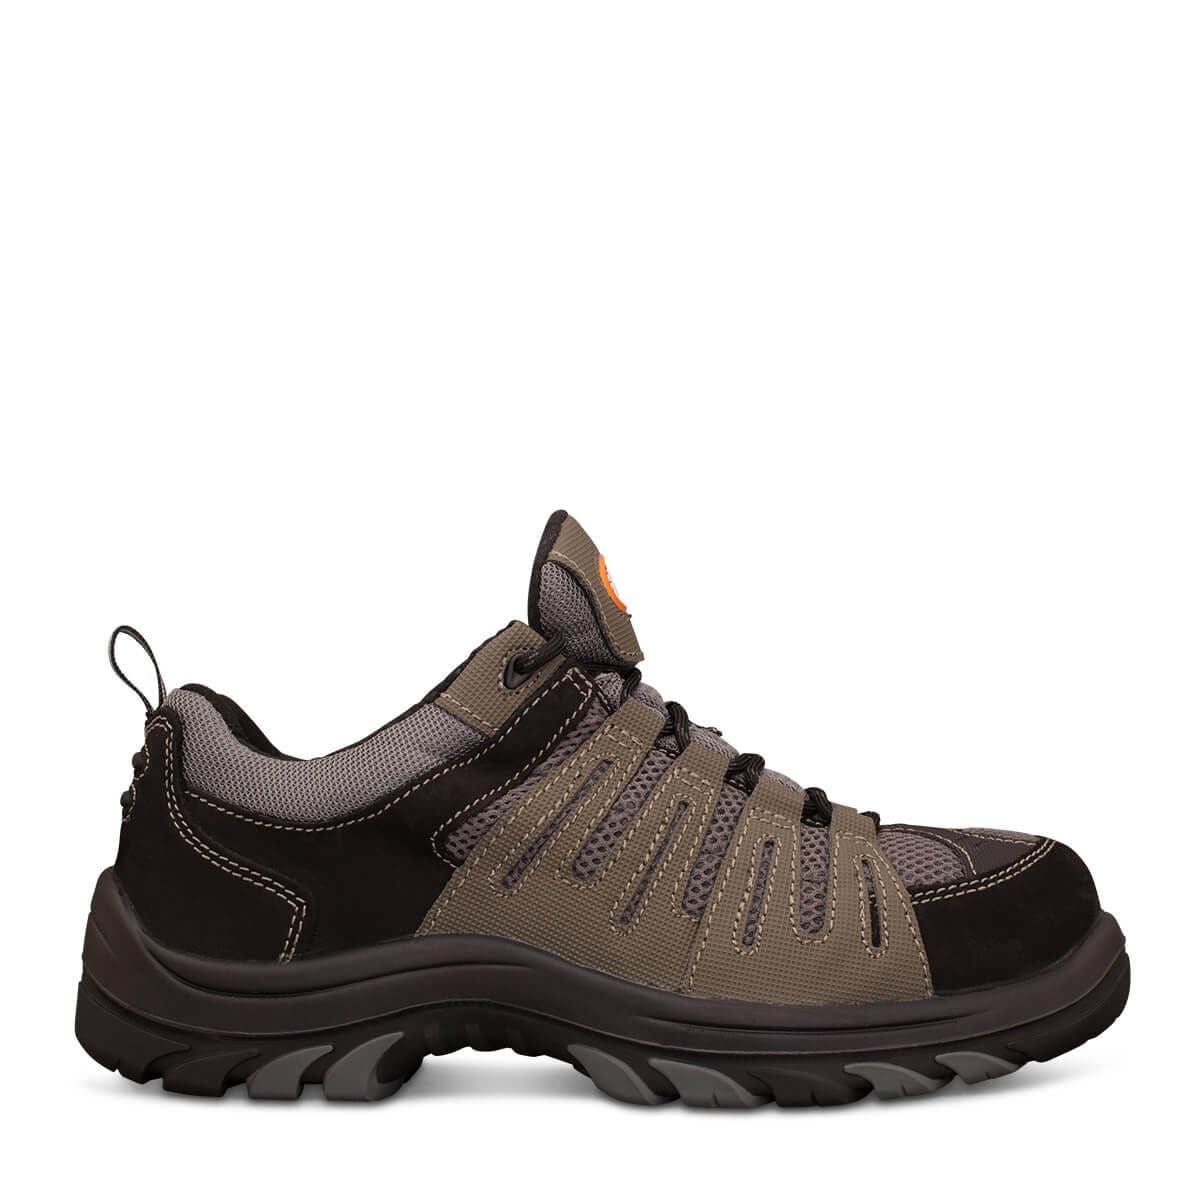 Oliver Mens 44-515 lu Sports Shoes Comp tpu Grey/Black 8